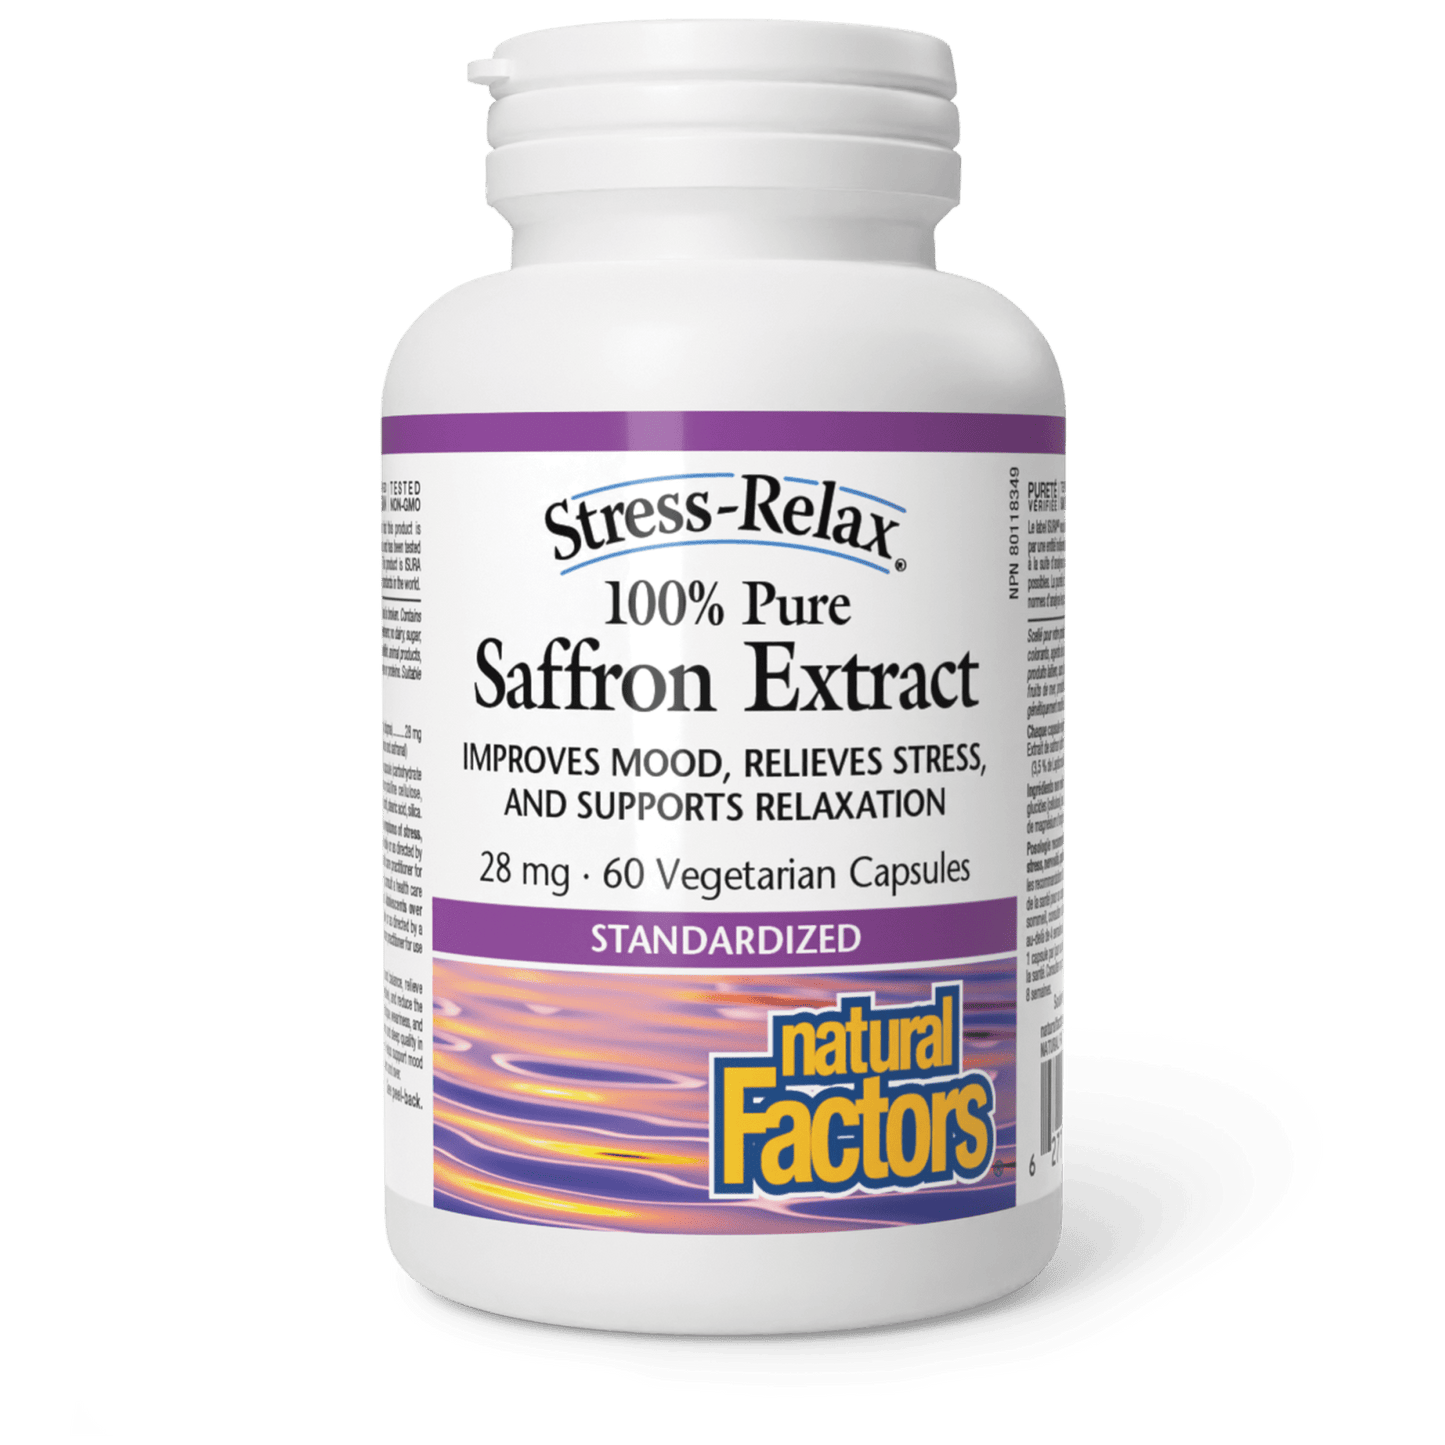 Saffron Extract 100% Pure 28 mg, Stress-Relax, Natural Factors|v|image|2873